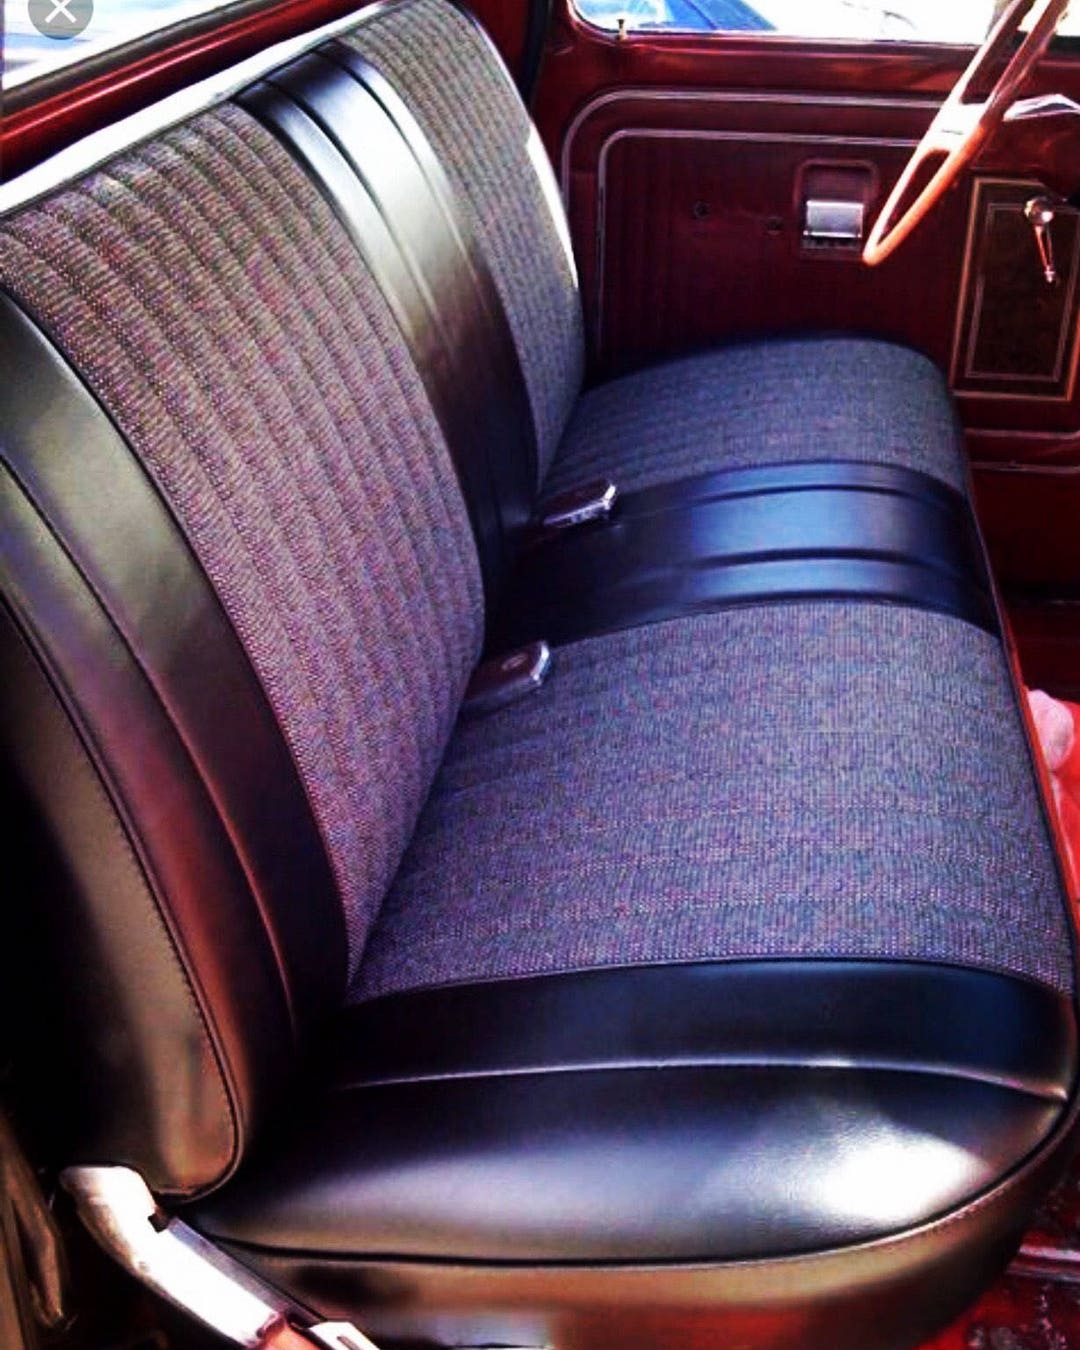 Truck seats - Blog - Sege Seats